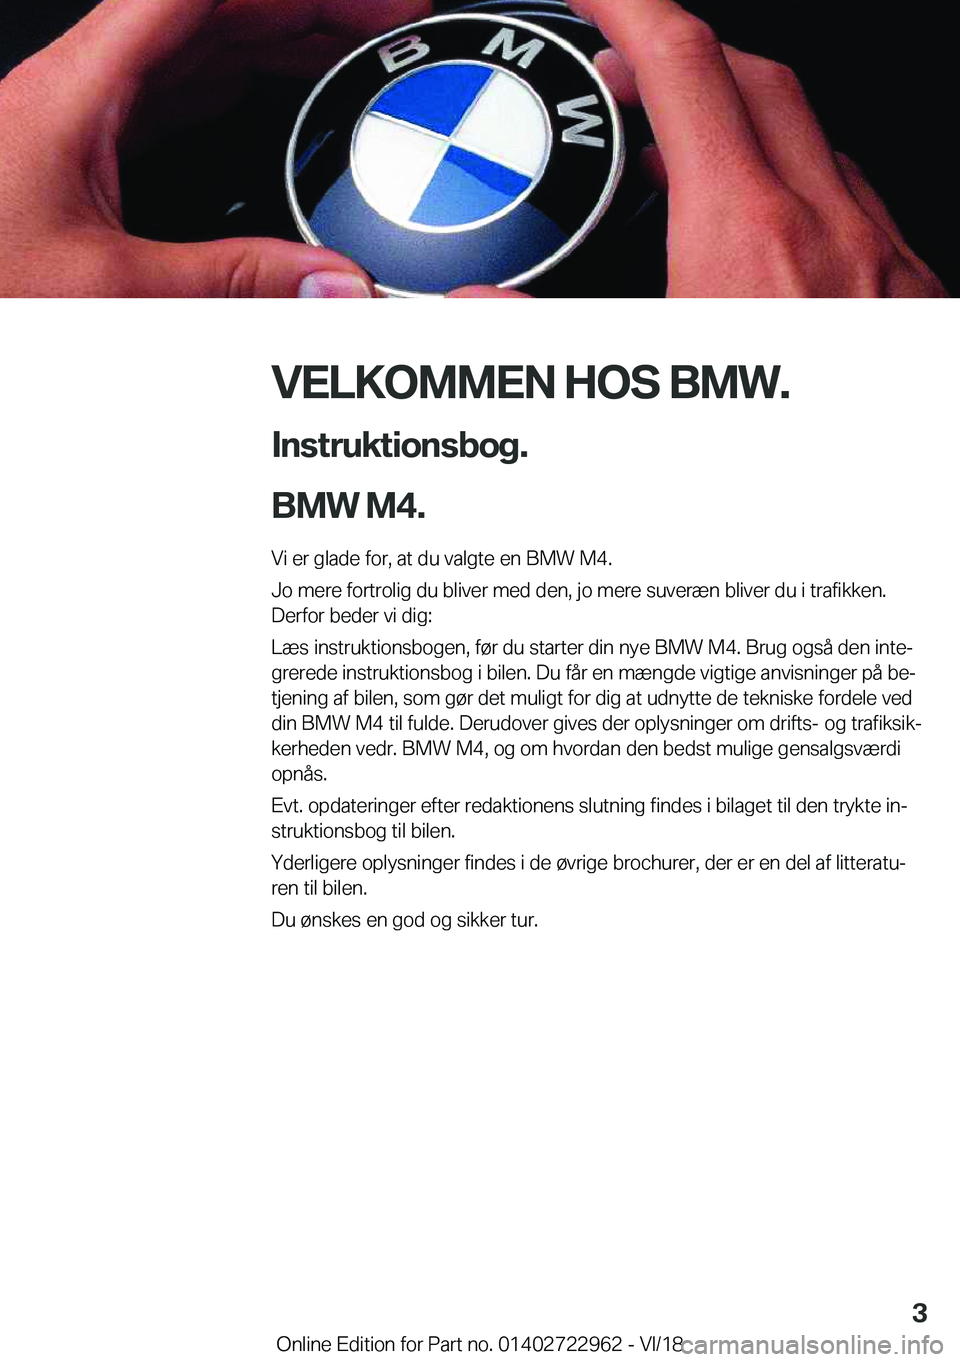 BMW M4 2019  InstruktionsbØger (in Danish) �V�E�L�K�O�M�M�E�N��H�O�S��B�M�W�.
�I�n�s�t�r�u�k�t�i�o�n�s�b�o�g�.
�B�M�W��M�4�. �V�i��e�r��g�l�a�d�e��f�o�r�,��a�t��d�u��v�a�l�g�t�e��e�n��B�M�W��M�4�.
�J�o��m�e�r�e��f�o�r�t�r�o�l�i�g